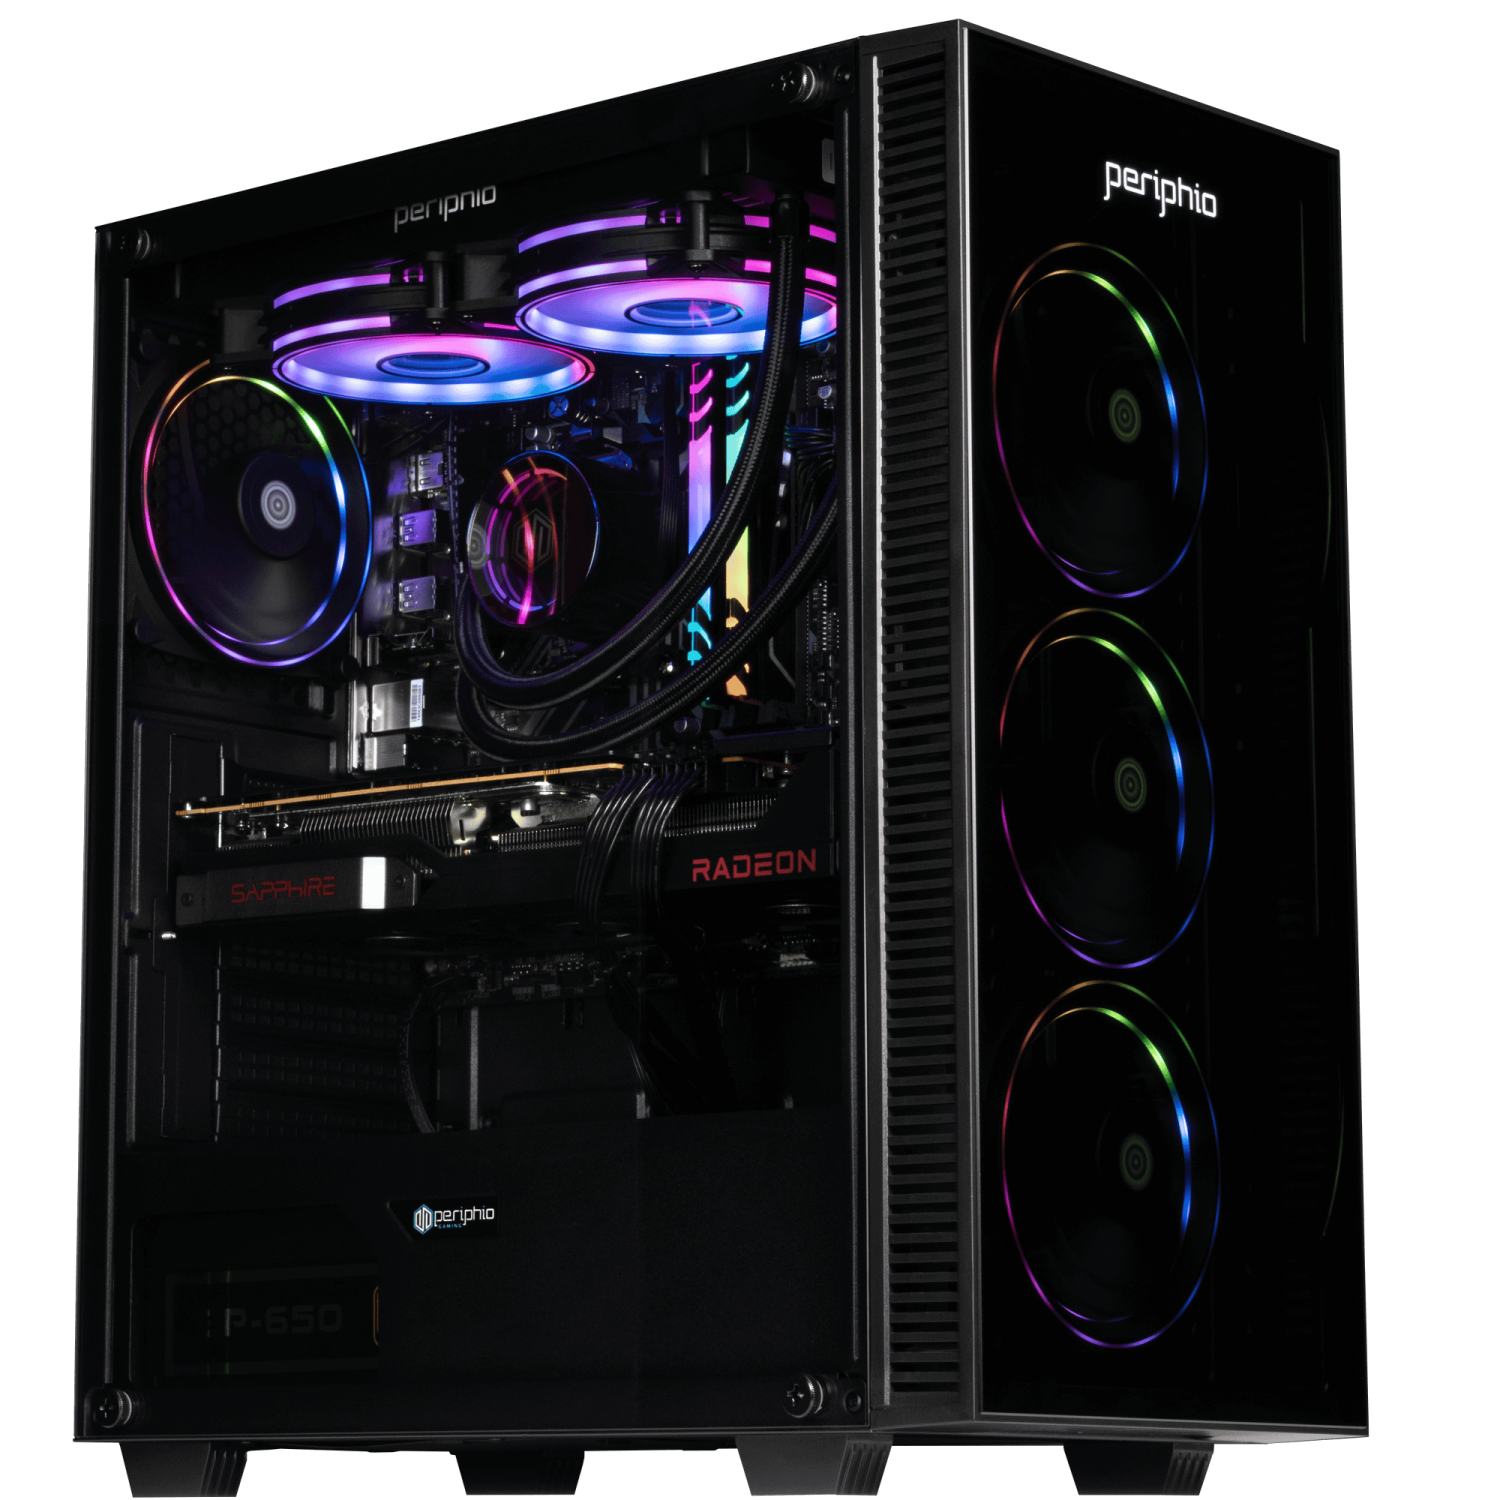 Periphio Firestorm Prebuilt VR Ready Gaming PC |AMD Ryzen 5 5600X (4.6GHz Turbo) | Radeon RX 6800 XT (16GB) | 1TB M.2 NVMe SSD | 16GB DDR4 RAM | Win 10 Gaming Desktop| WiFi + BT